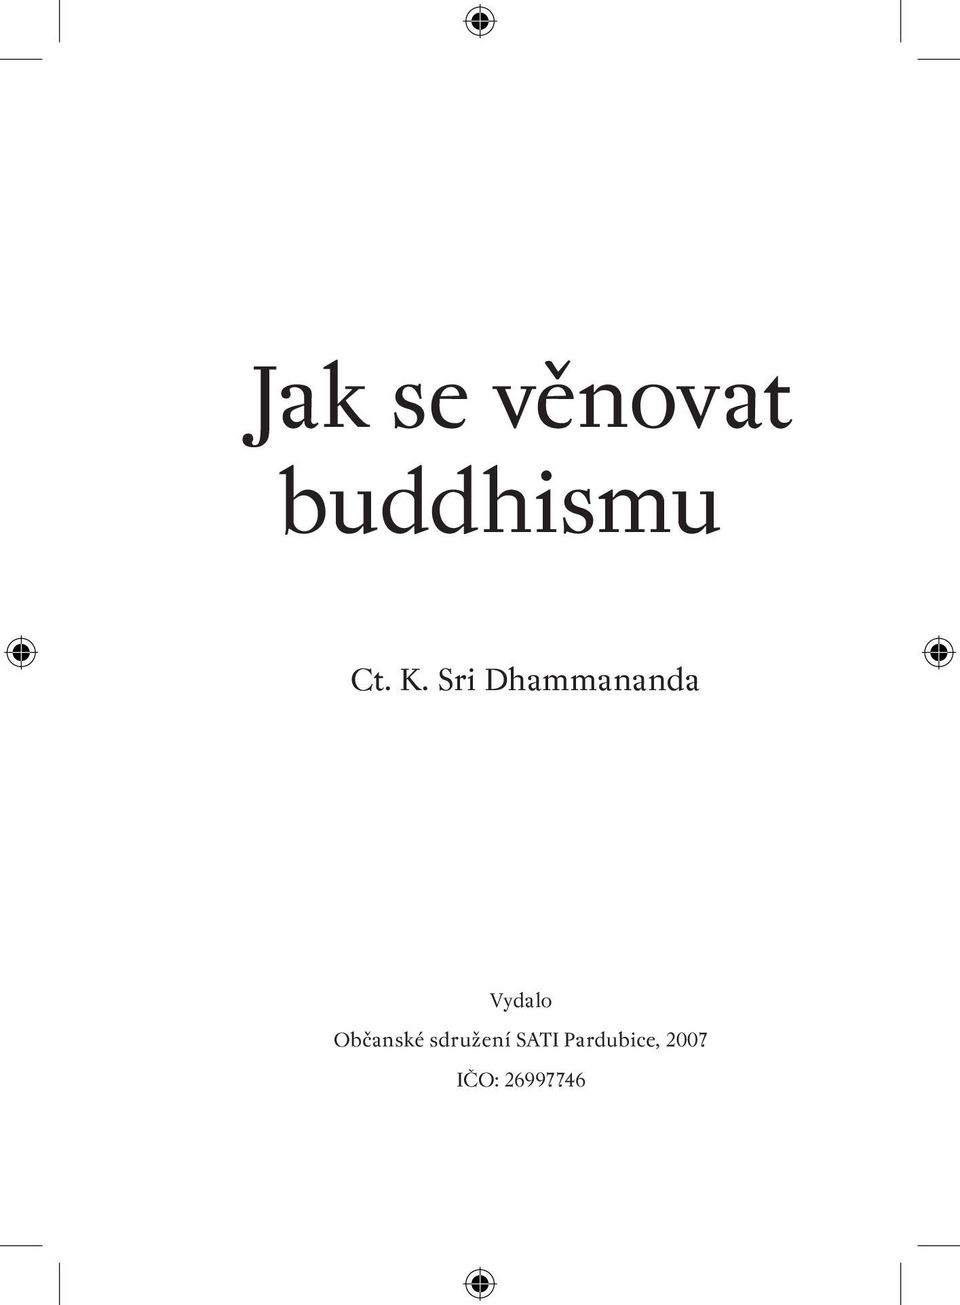 Sri Dhammananda Vydalo